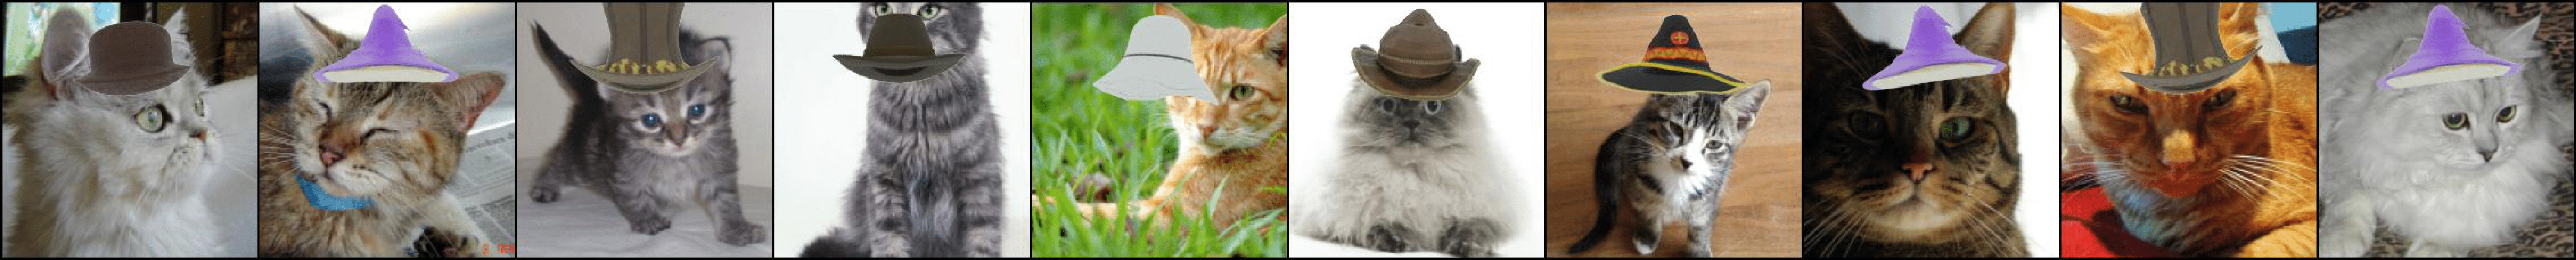 Cat Samples in Imagenet